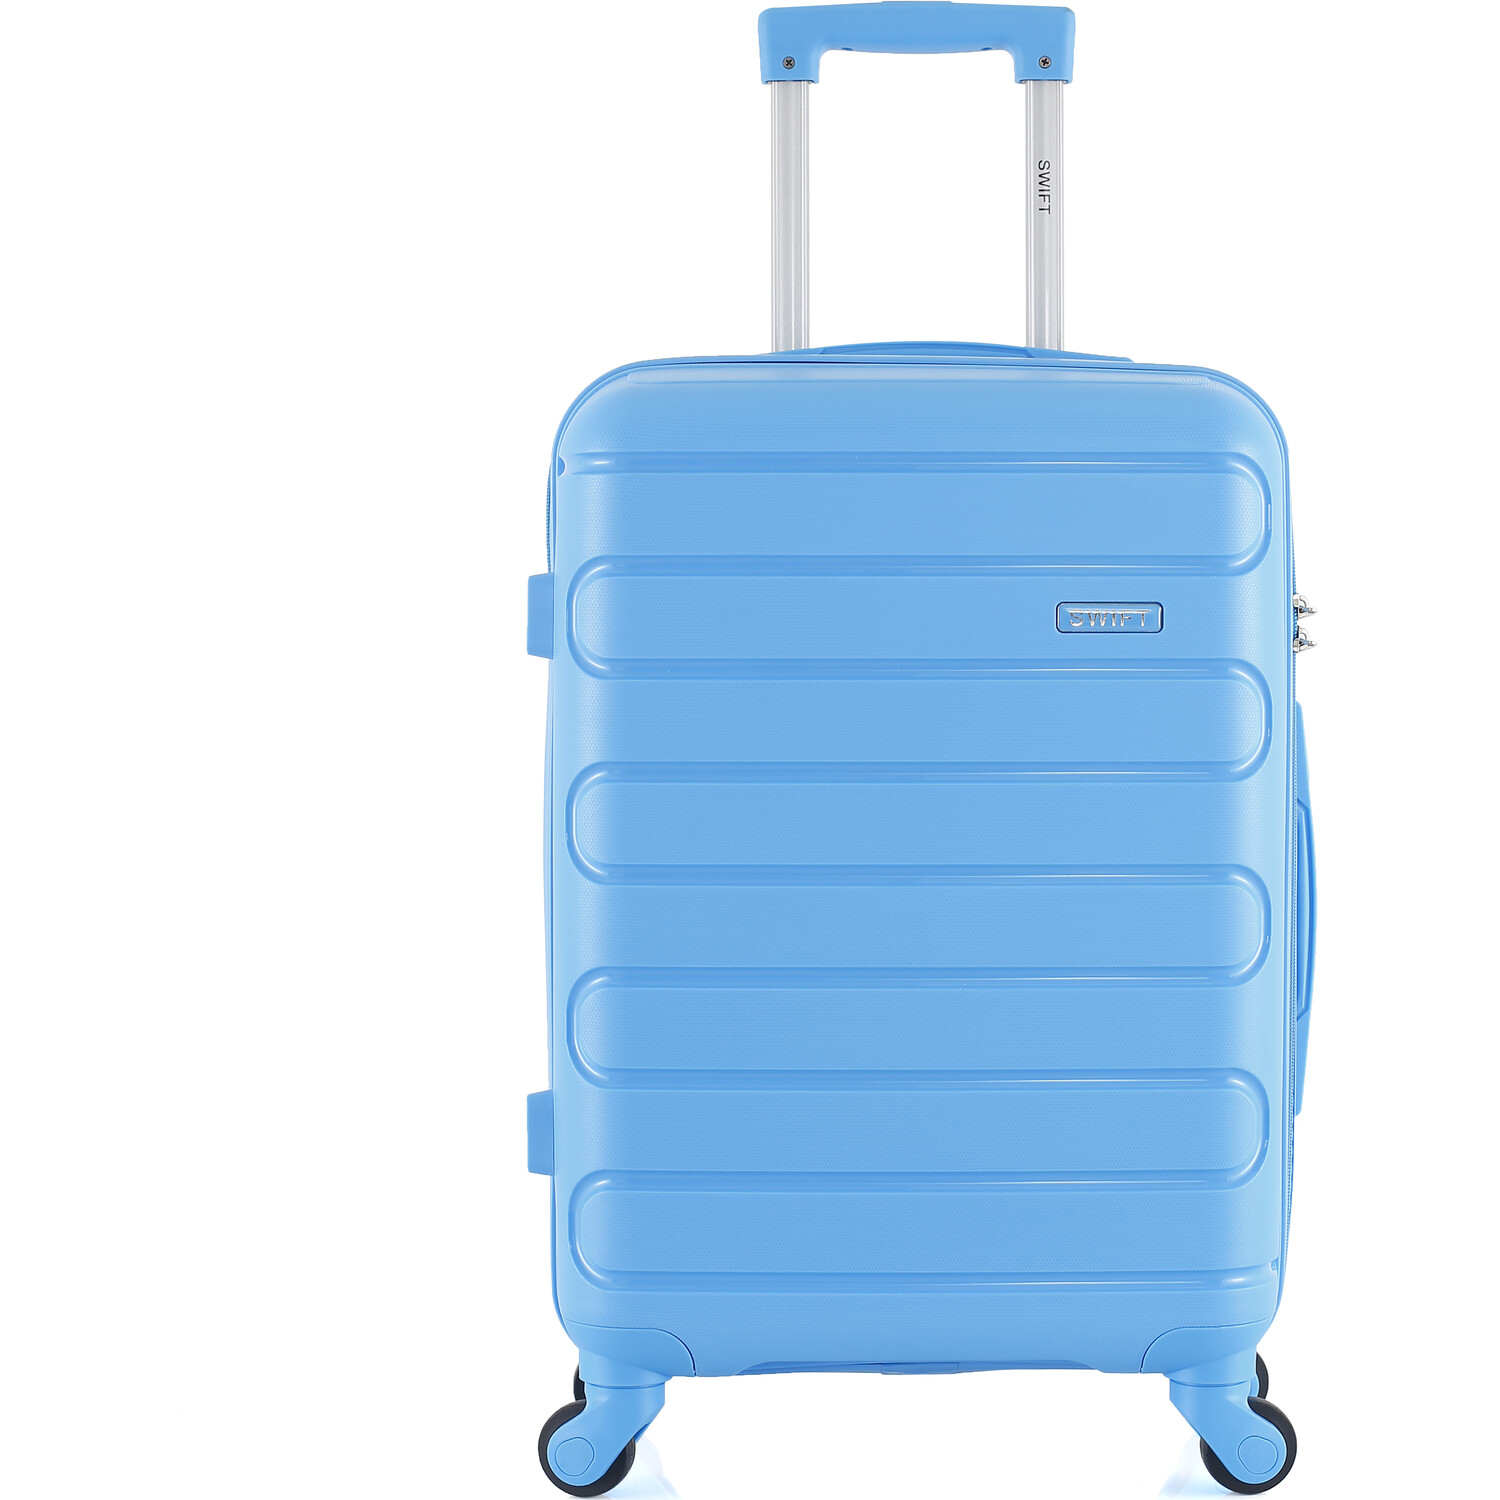 Swift Horizon Suitcase - Deep Teal / Large Case Image 1